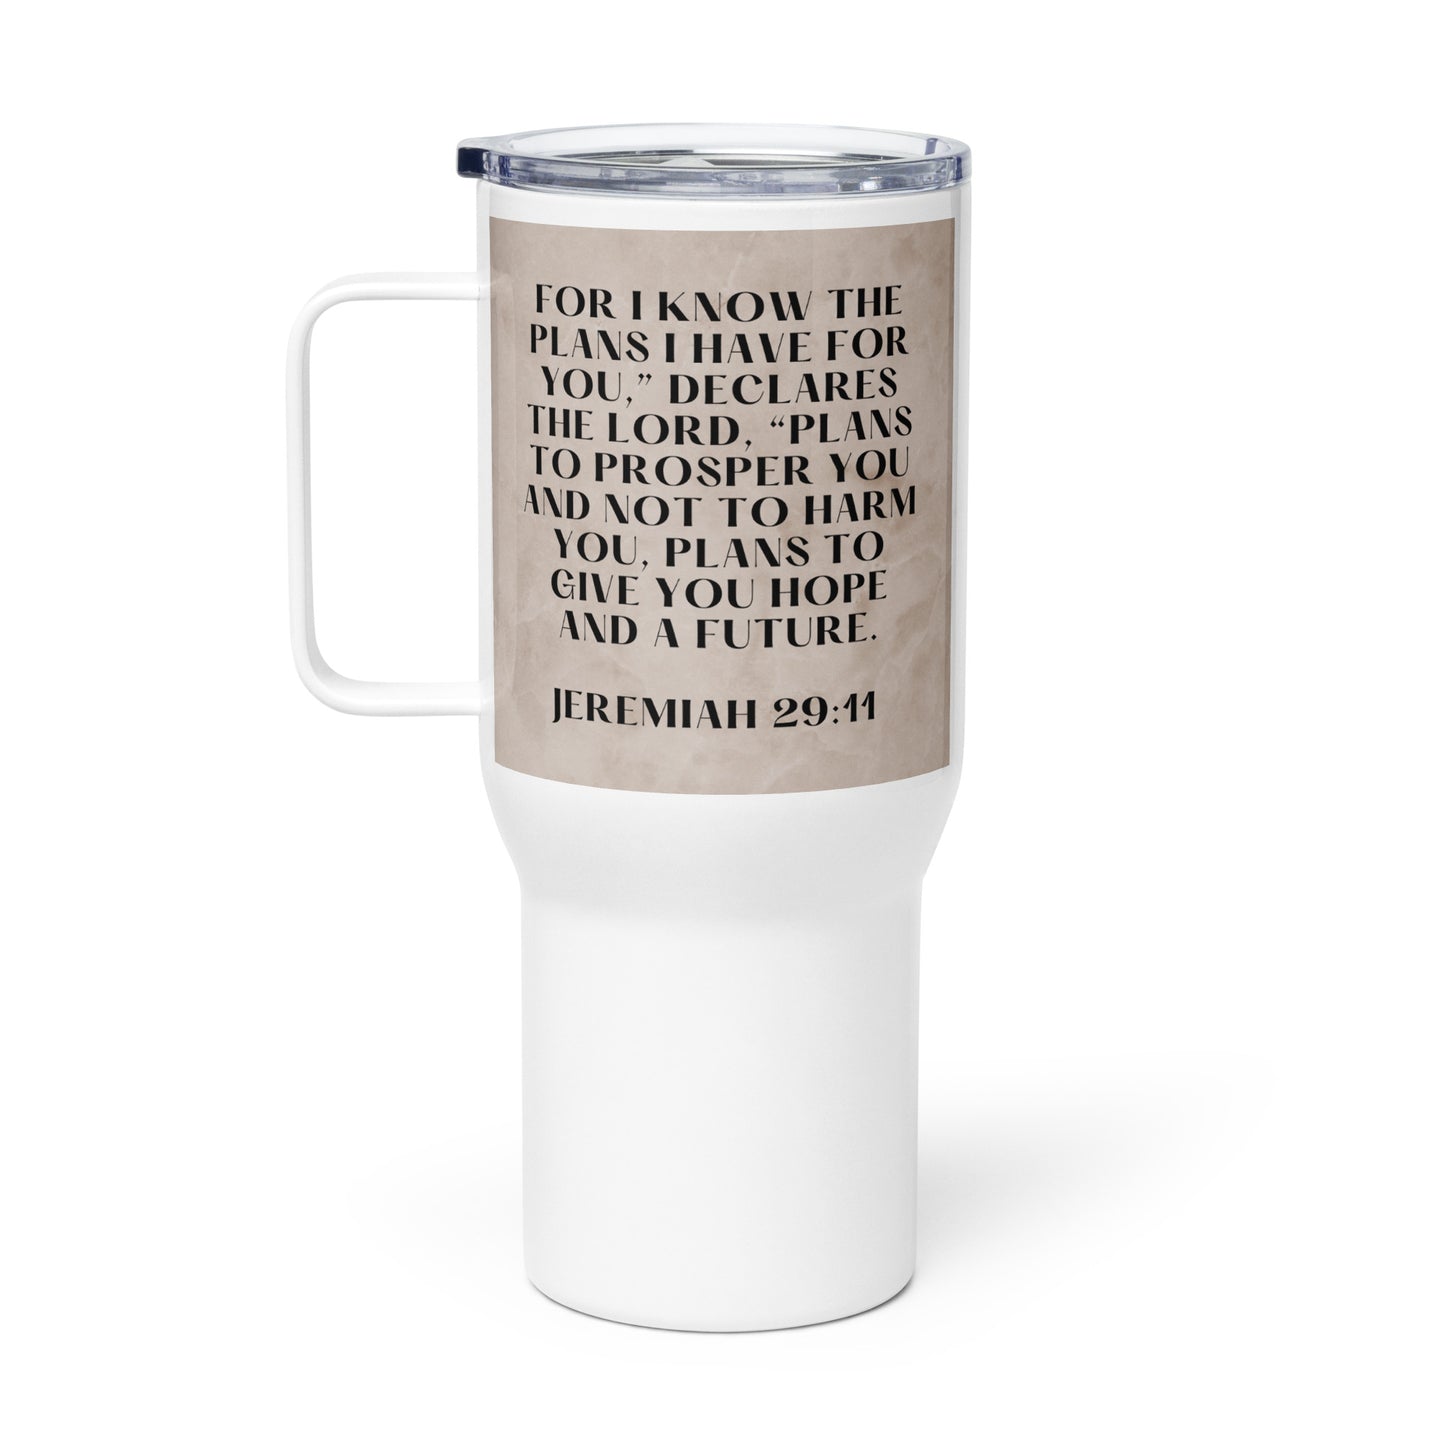 Jeremiah 29:11 Travel mug with a handle